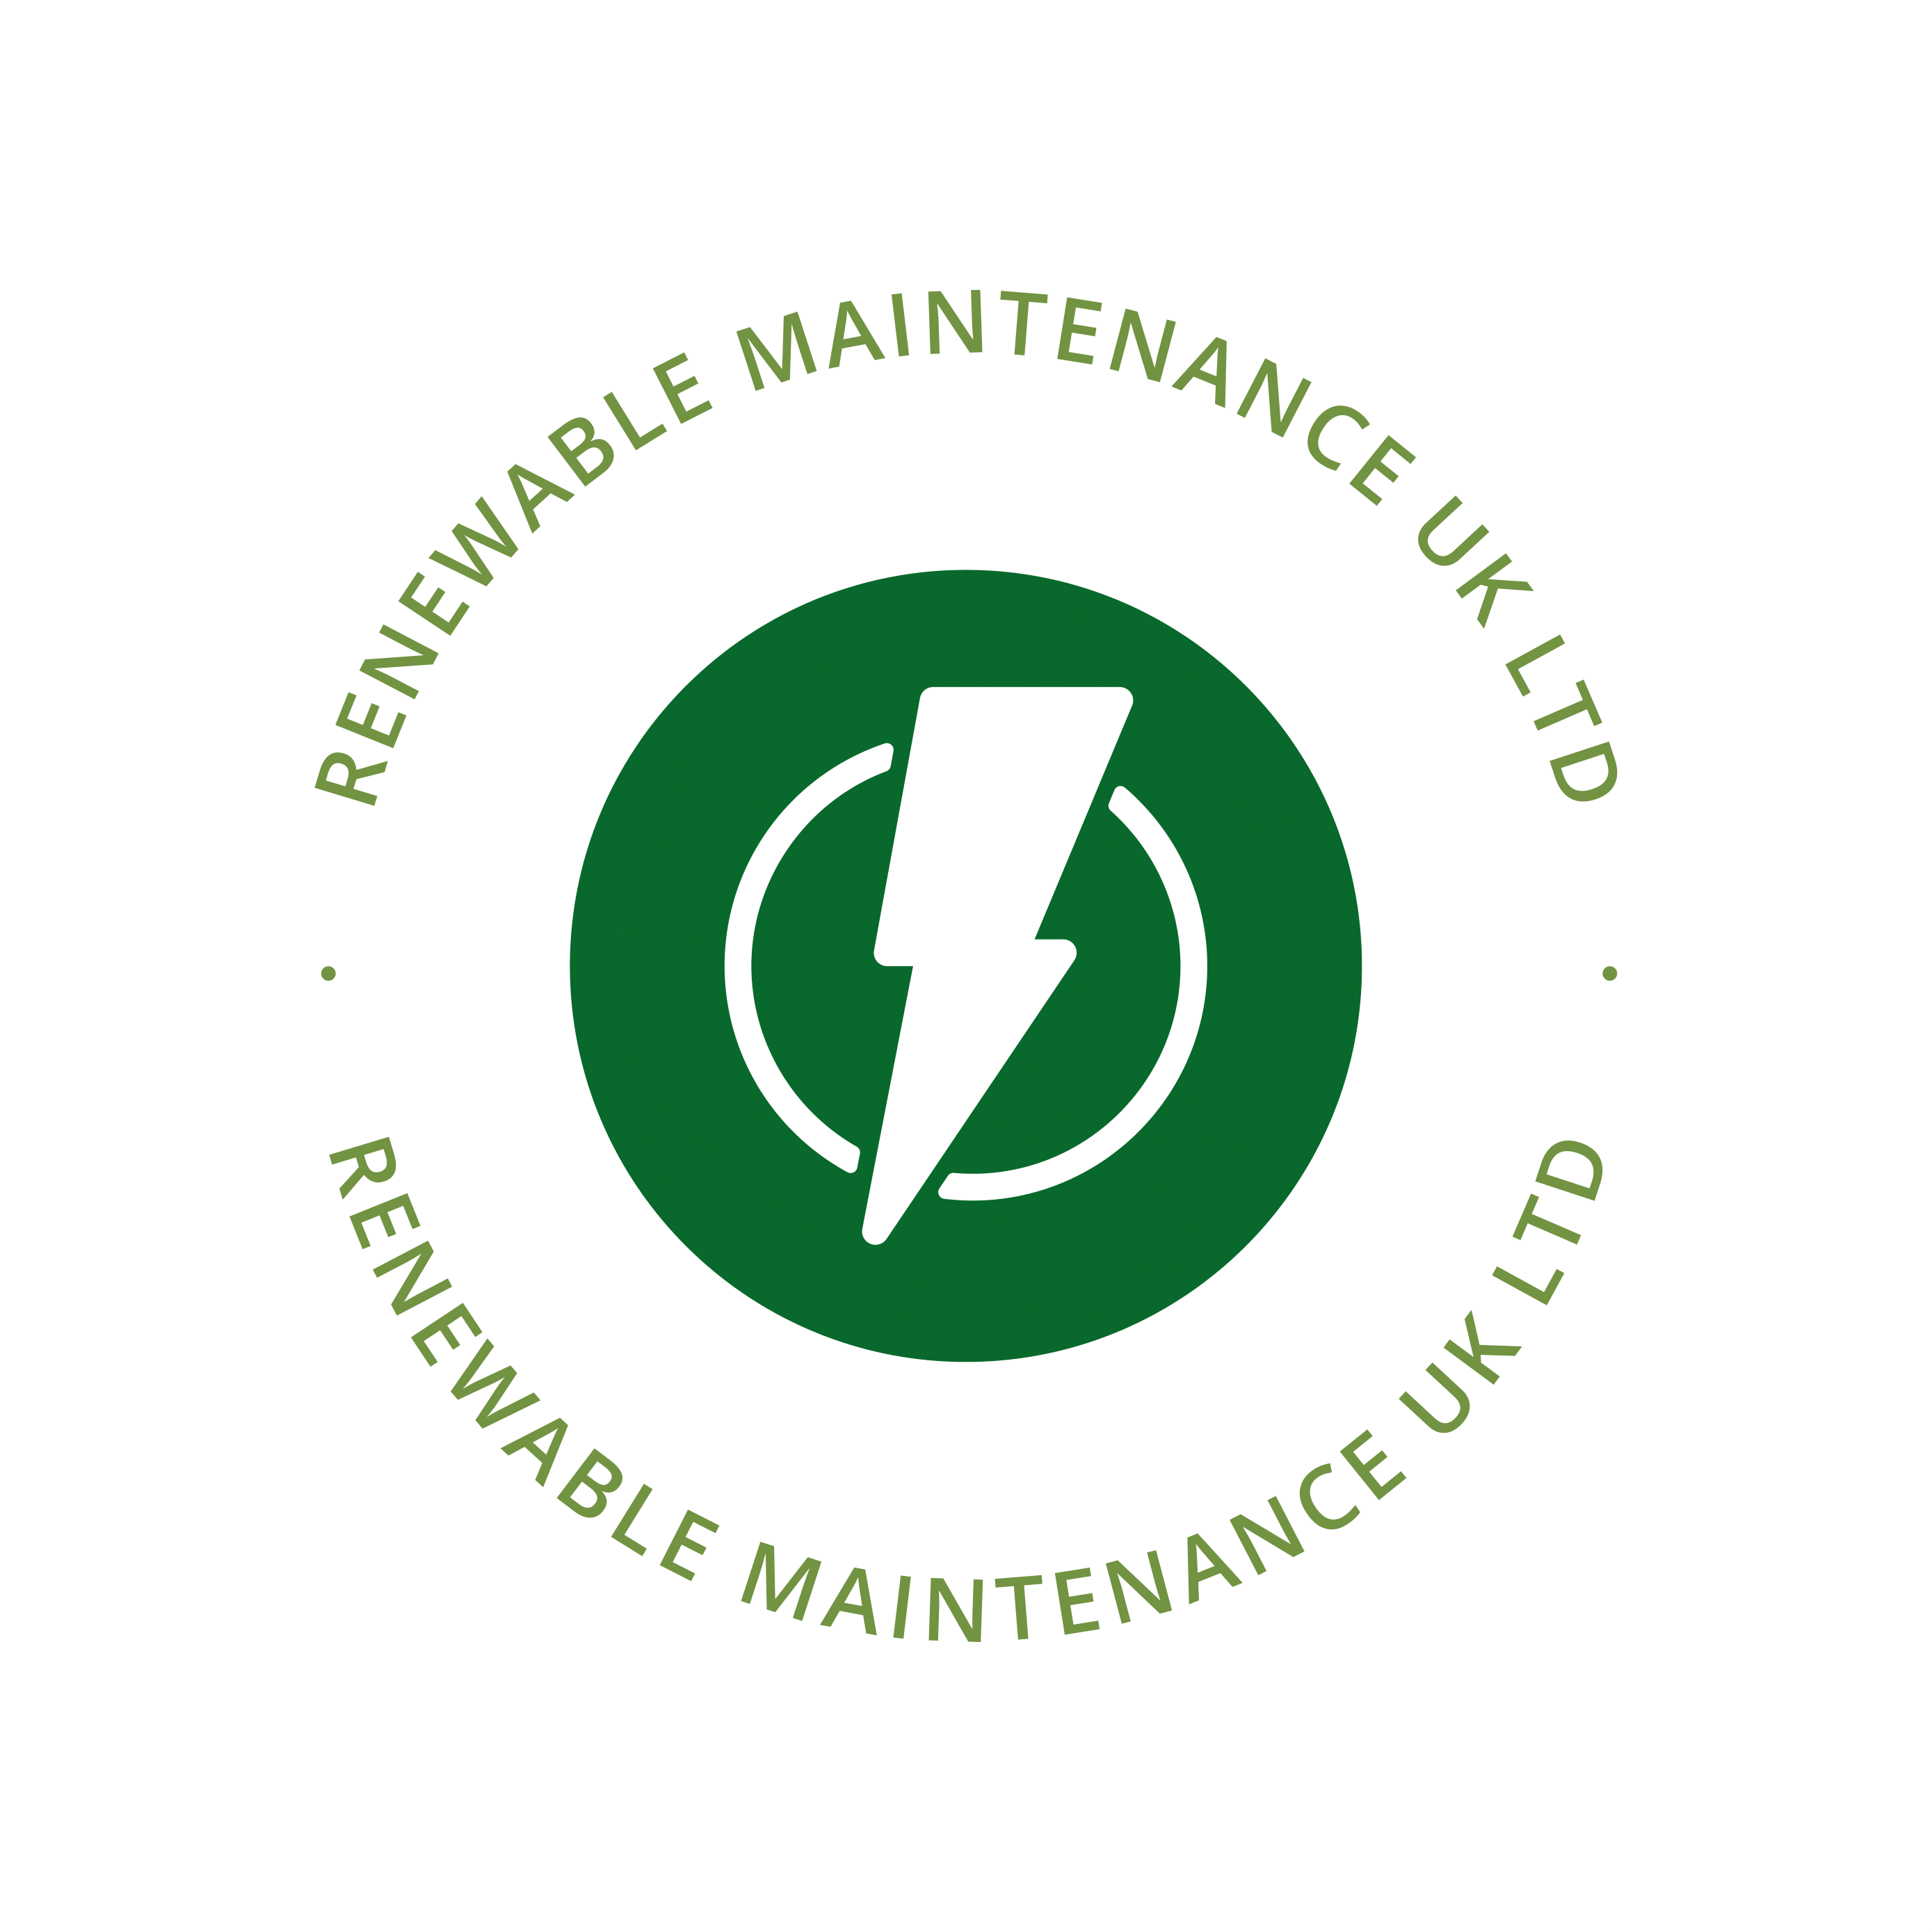 Renewable Maintenance UK